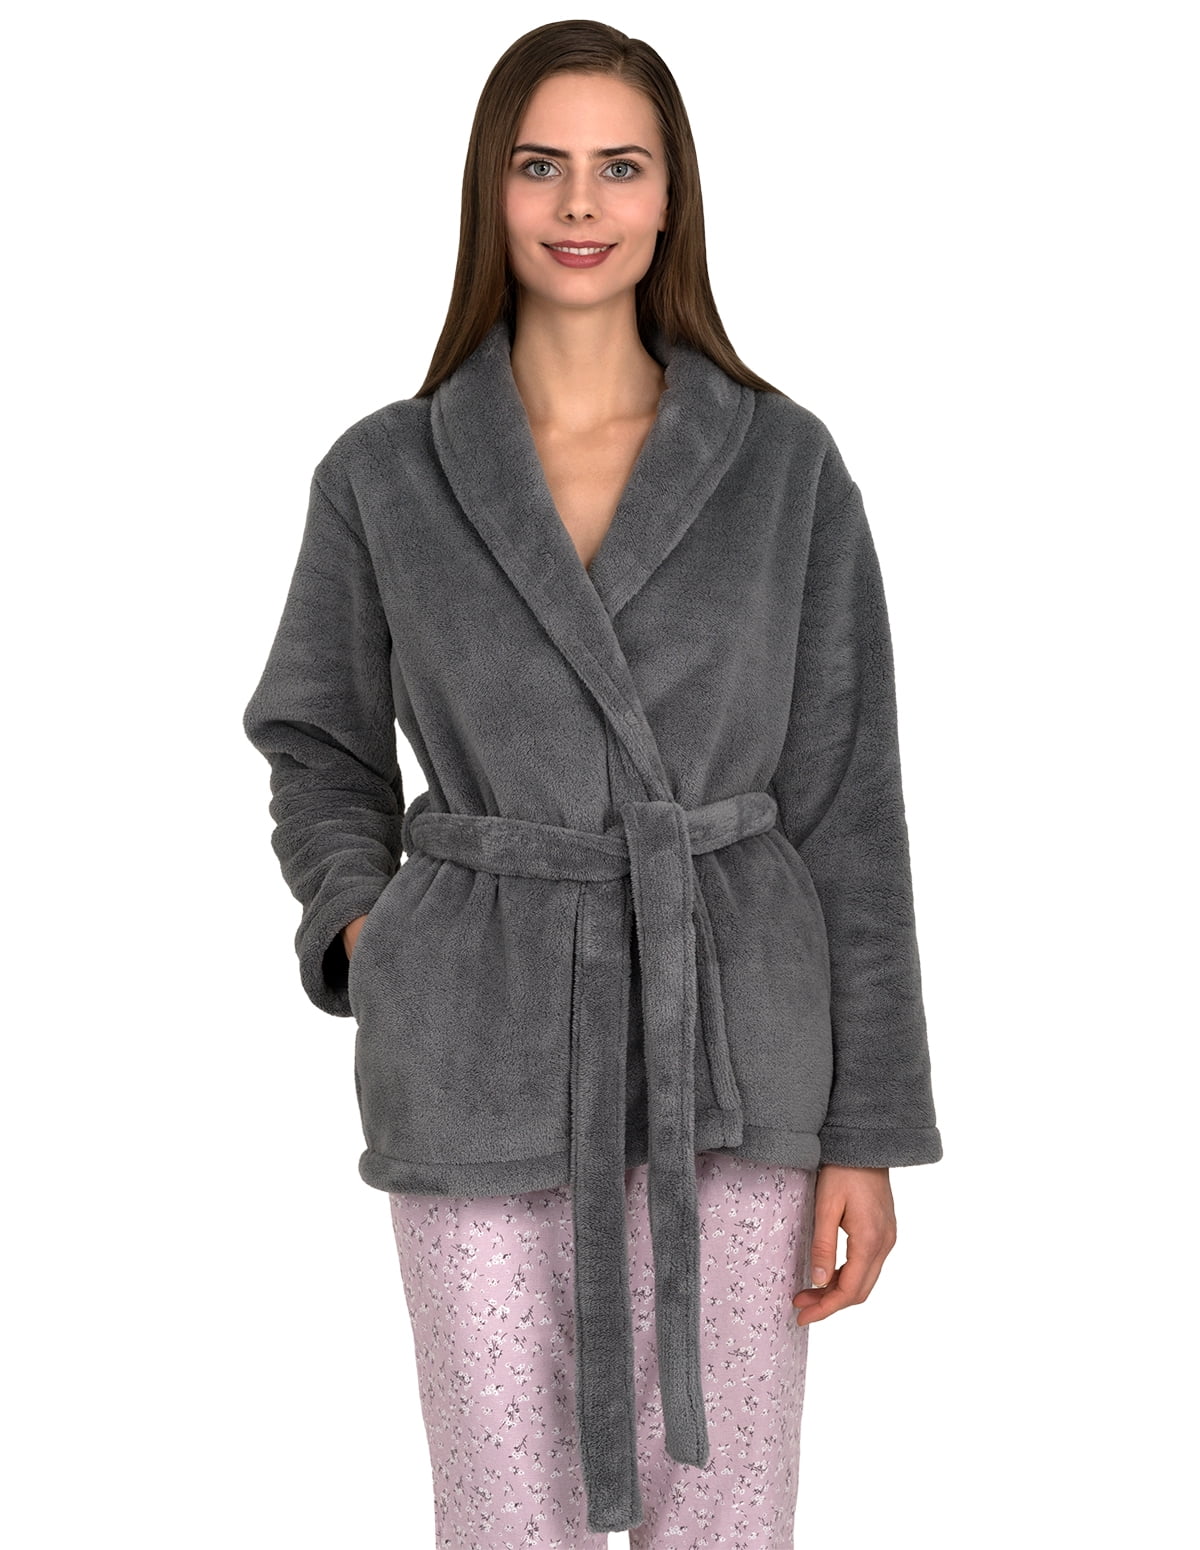 Sleepyheads Women’s Ultra Soft Fleece Short Wrap Robe Long Sleeve Cardigan Bed Jacket